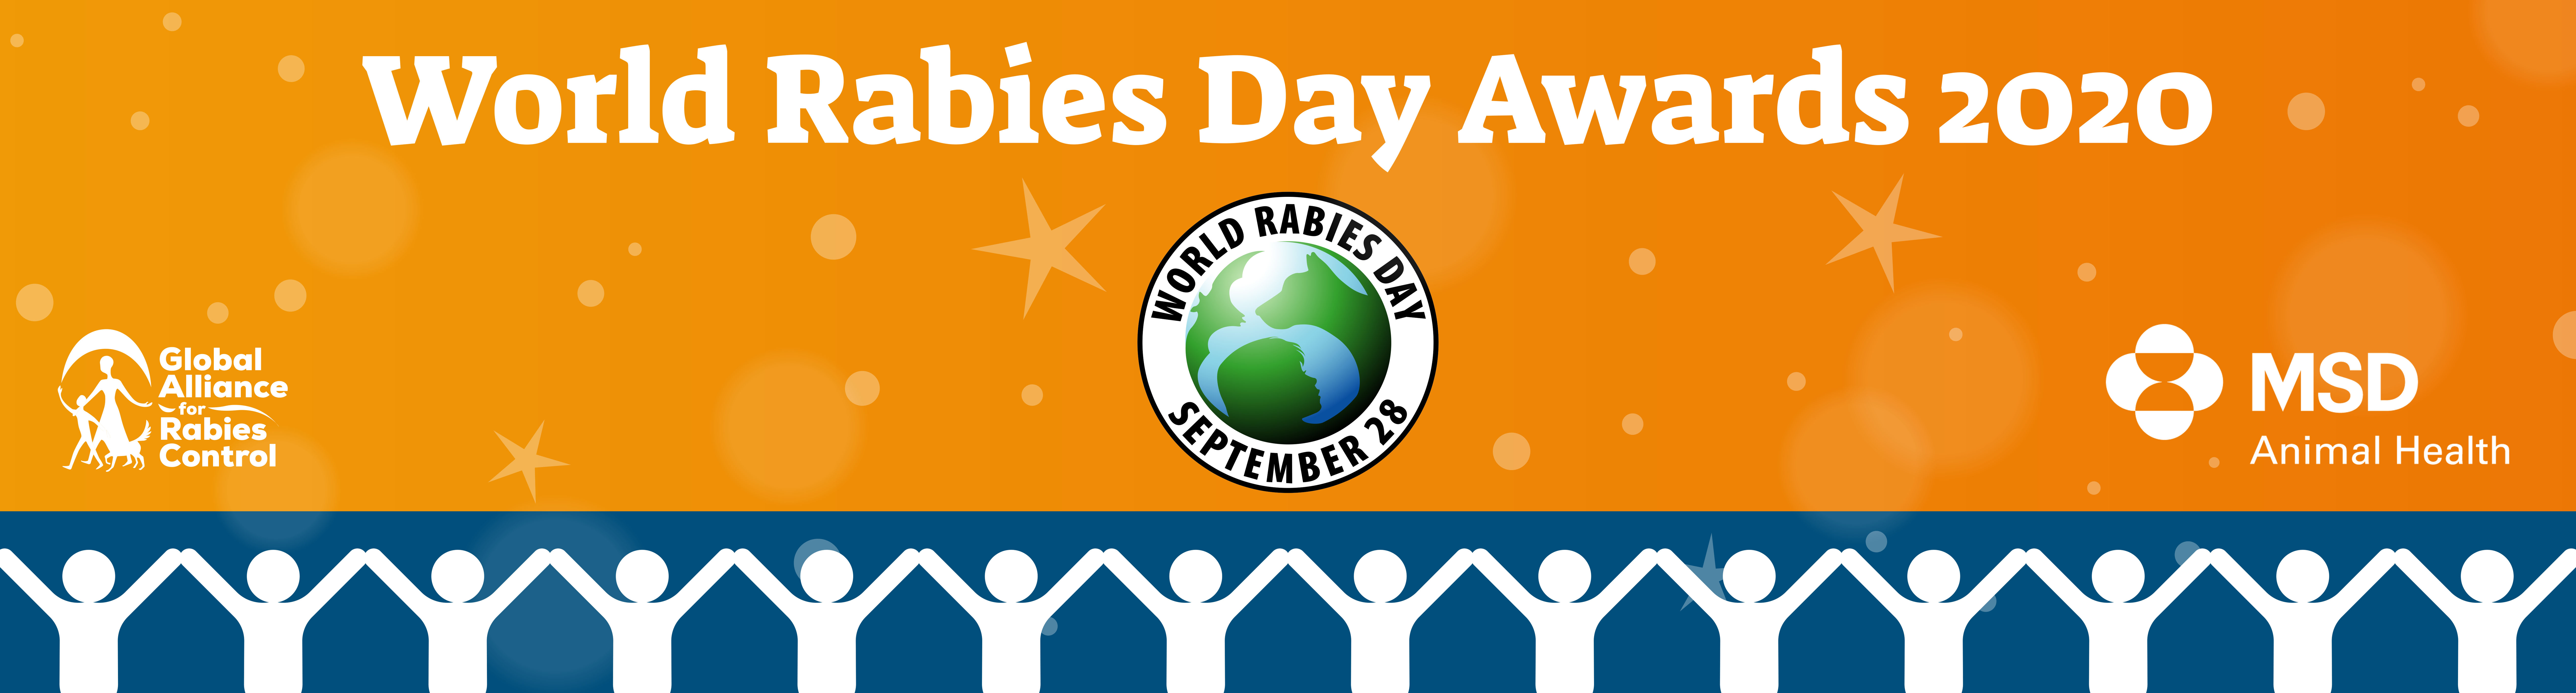 World Rabies Day Awards 2020